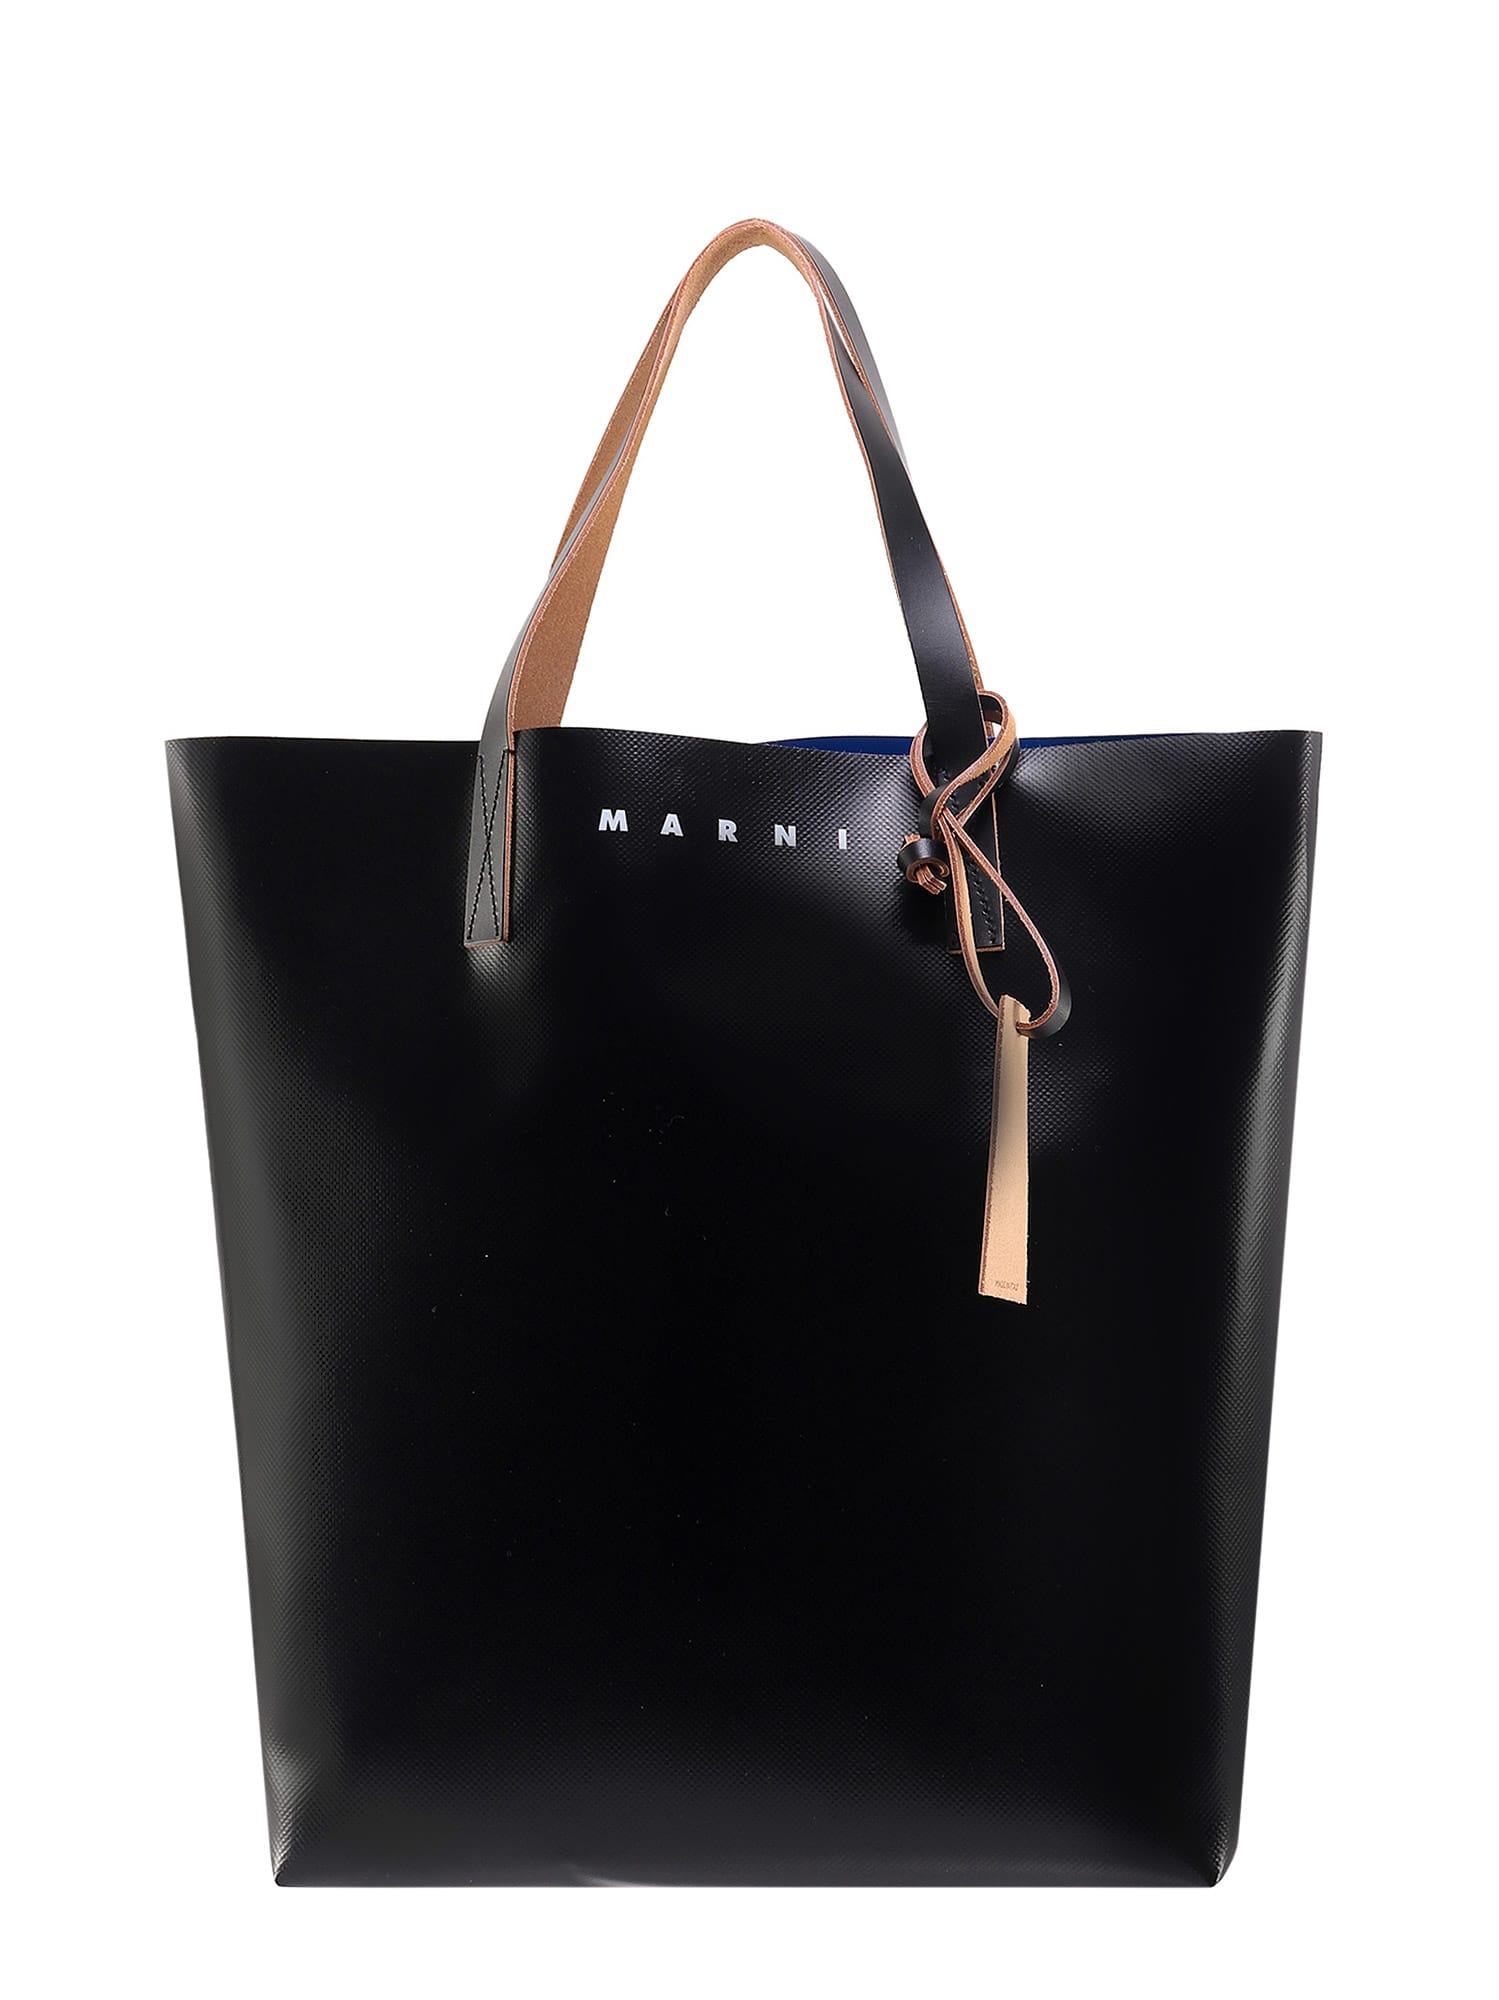 Marni Tribeca Handbag